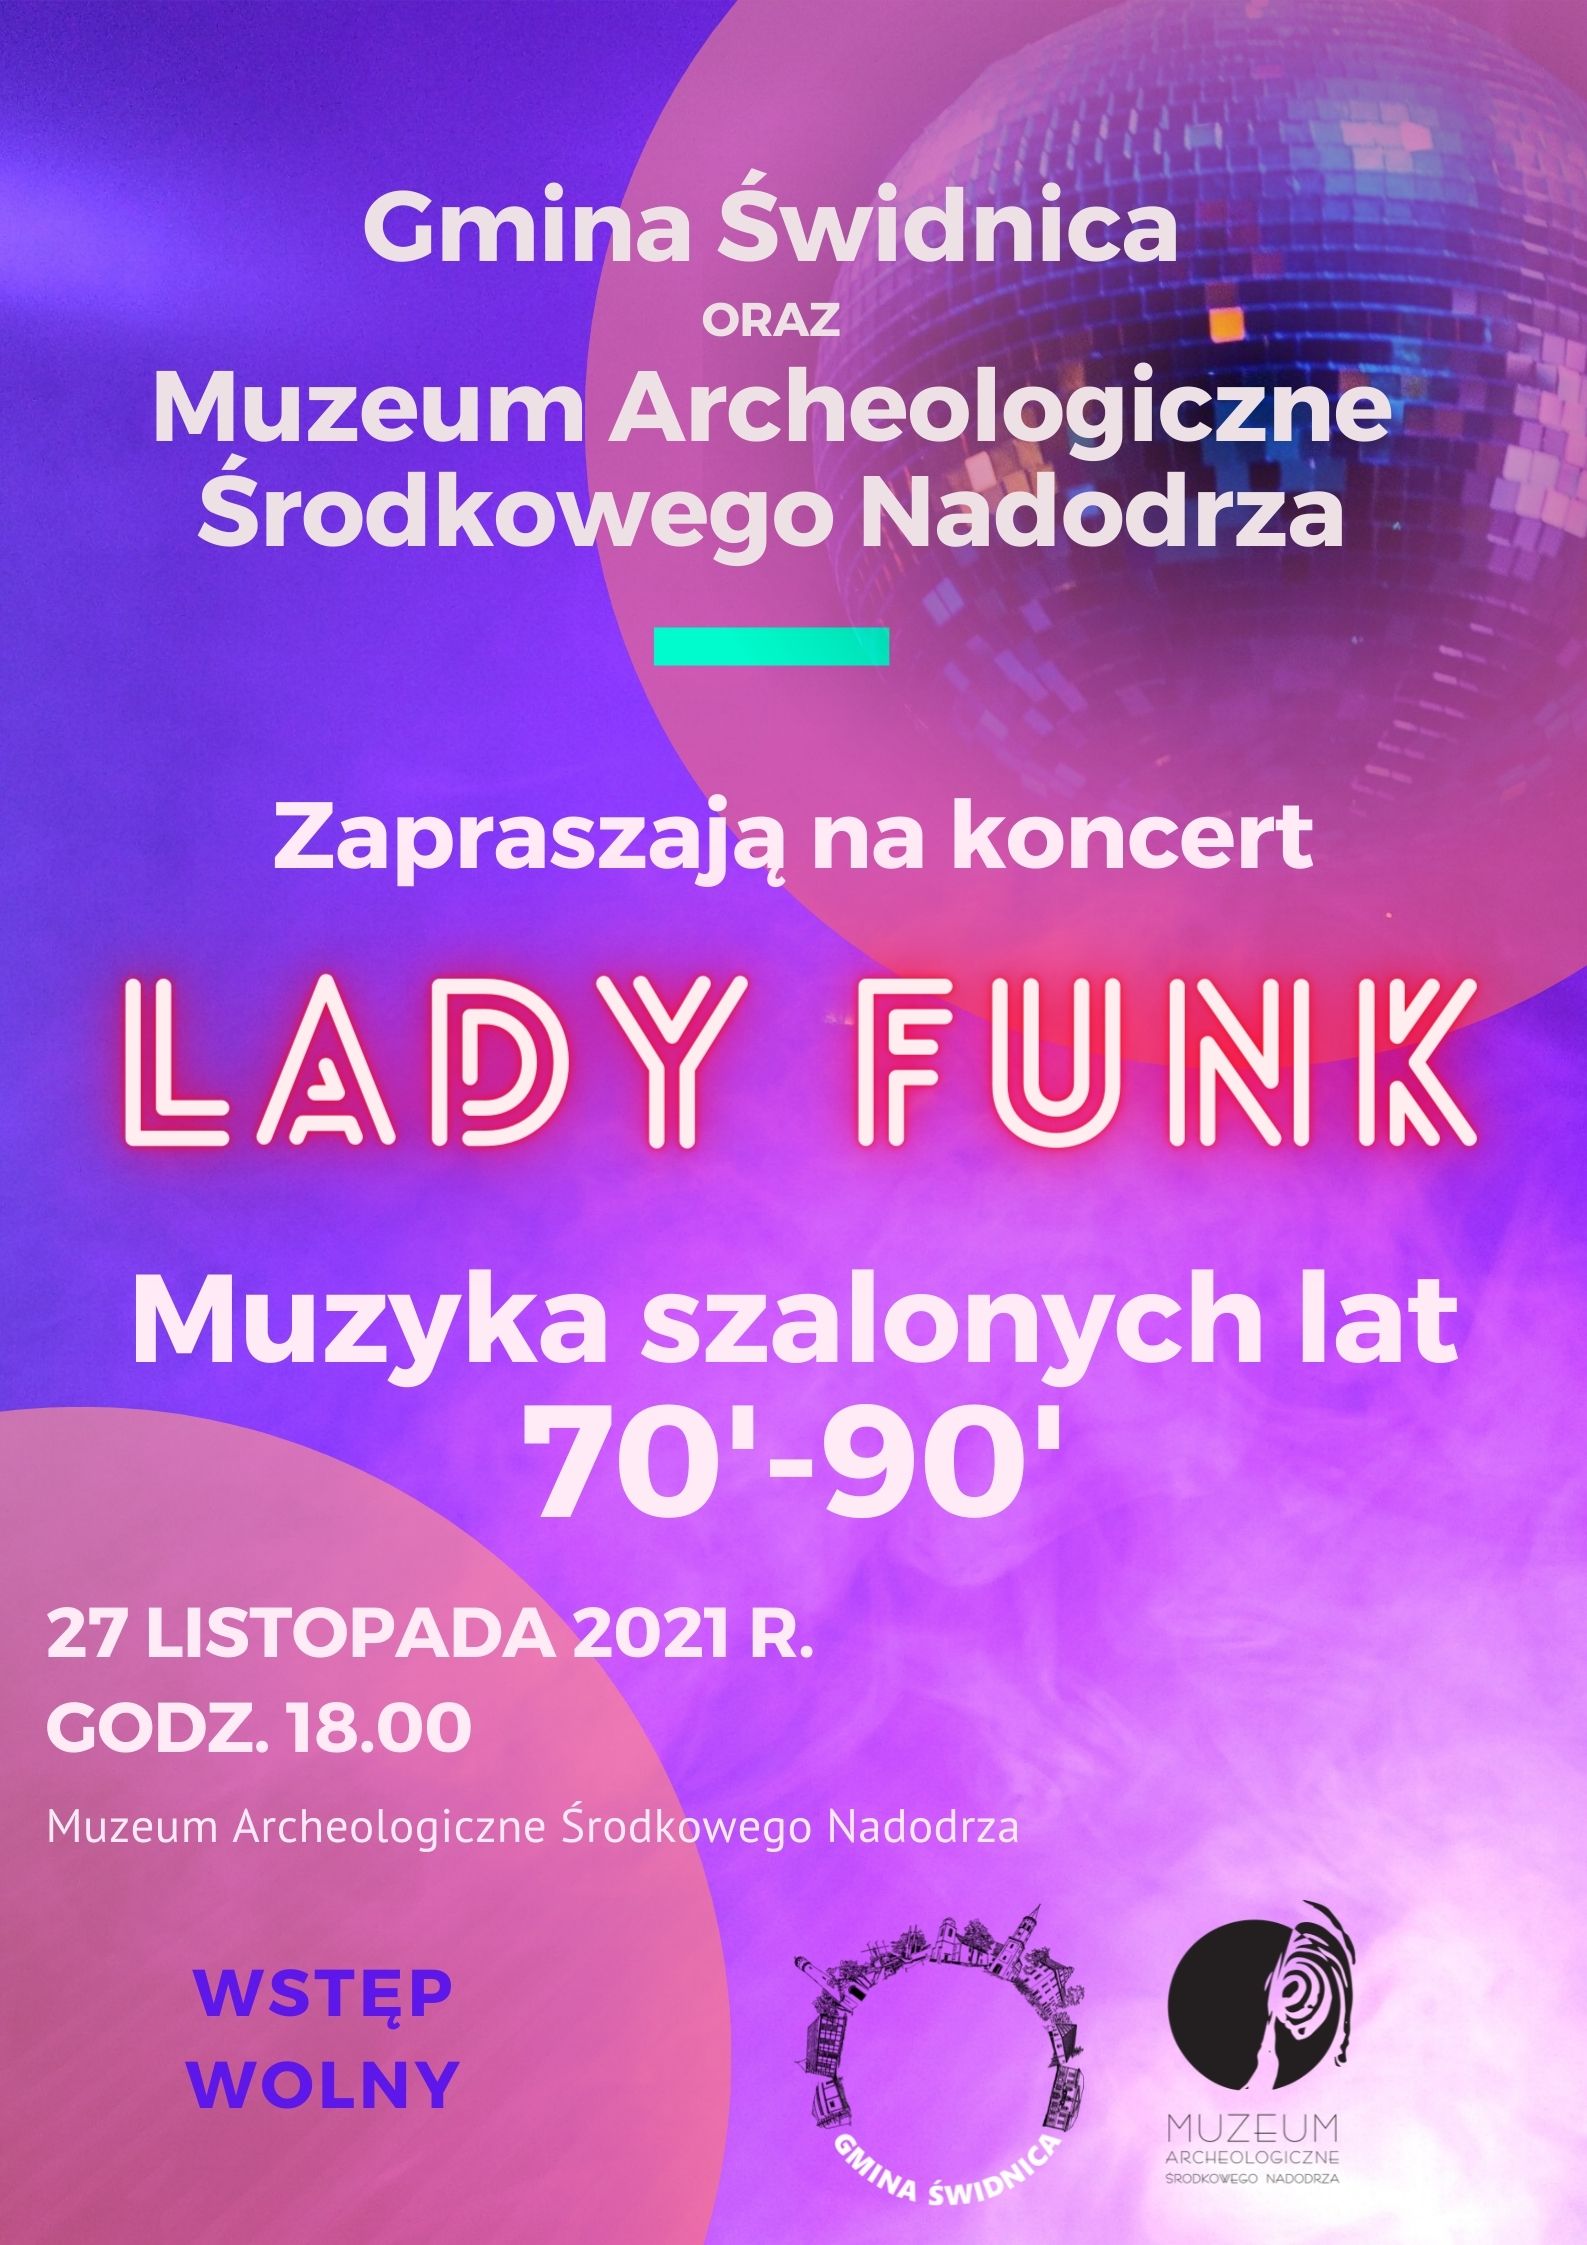 Plakat promujący koncert zespołu Lady Funk